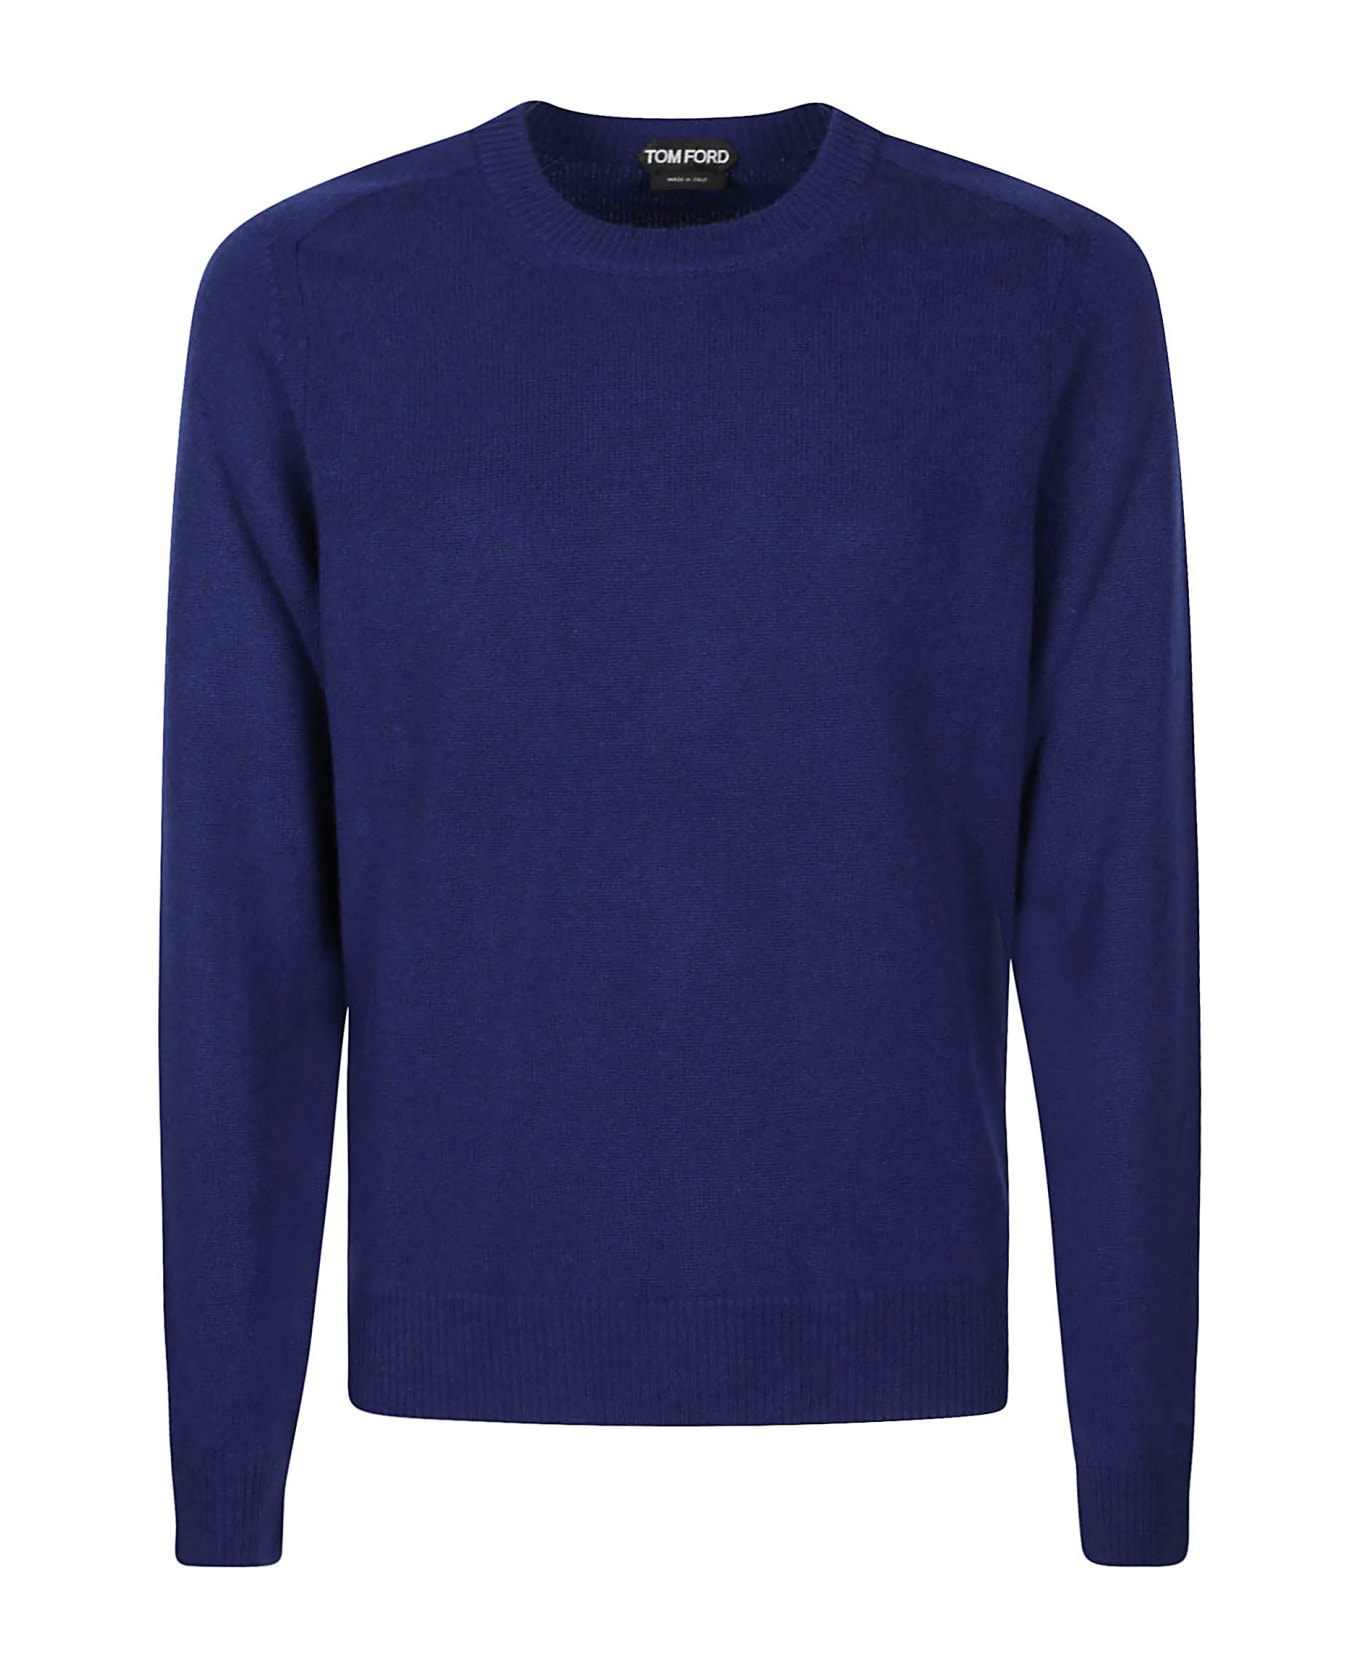 Tom Ford Cashmere Saddle Sweater - Dark Blue